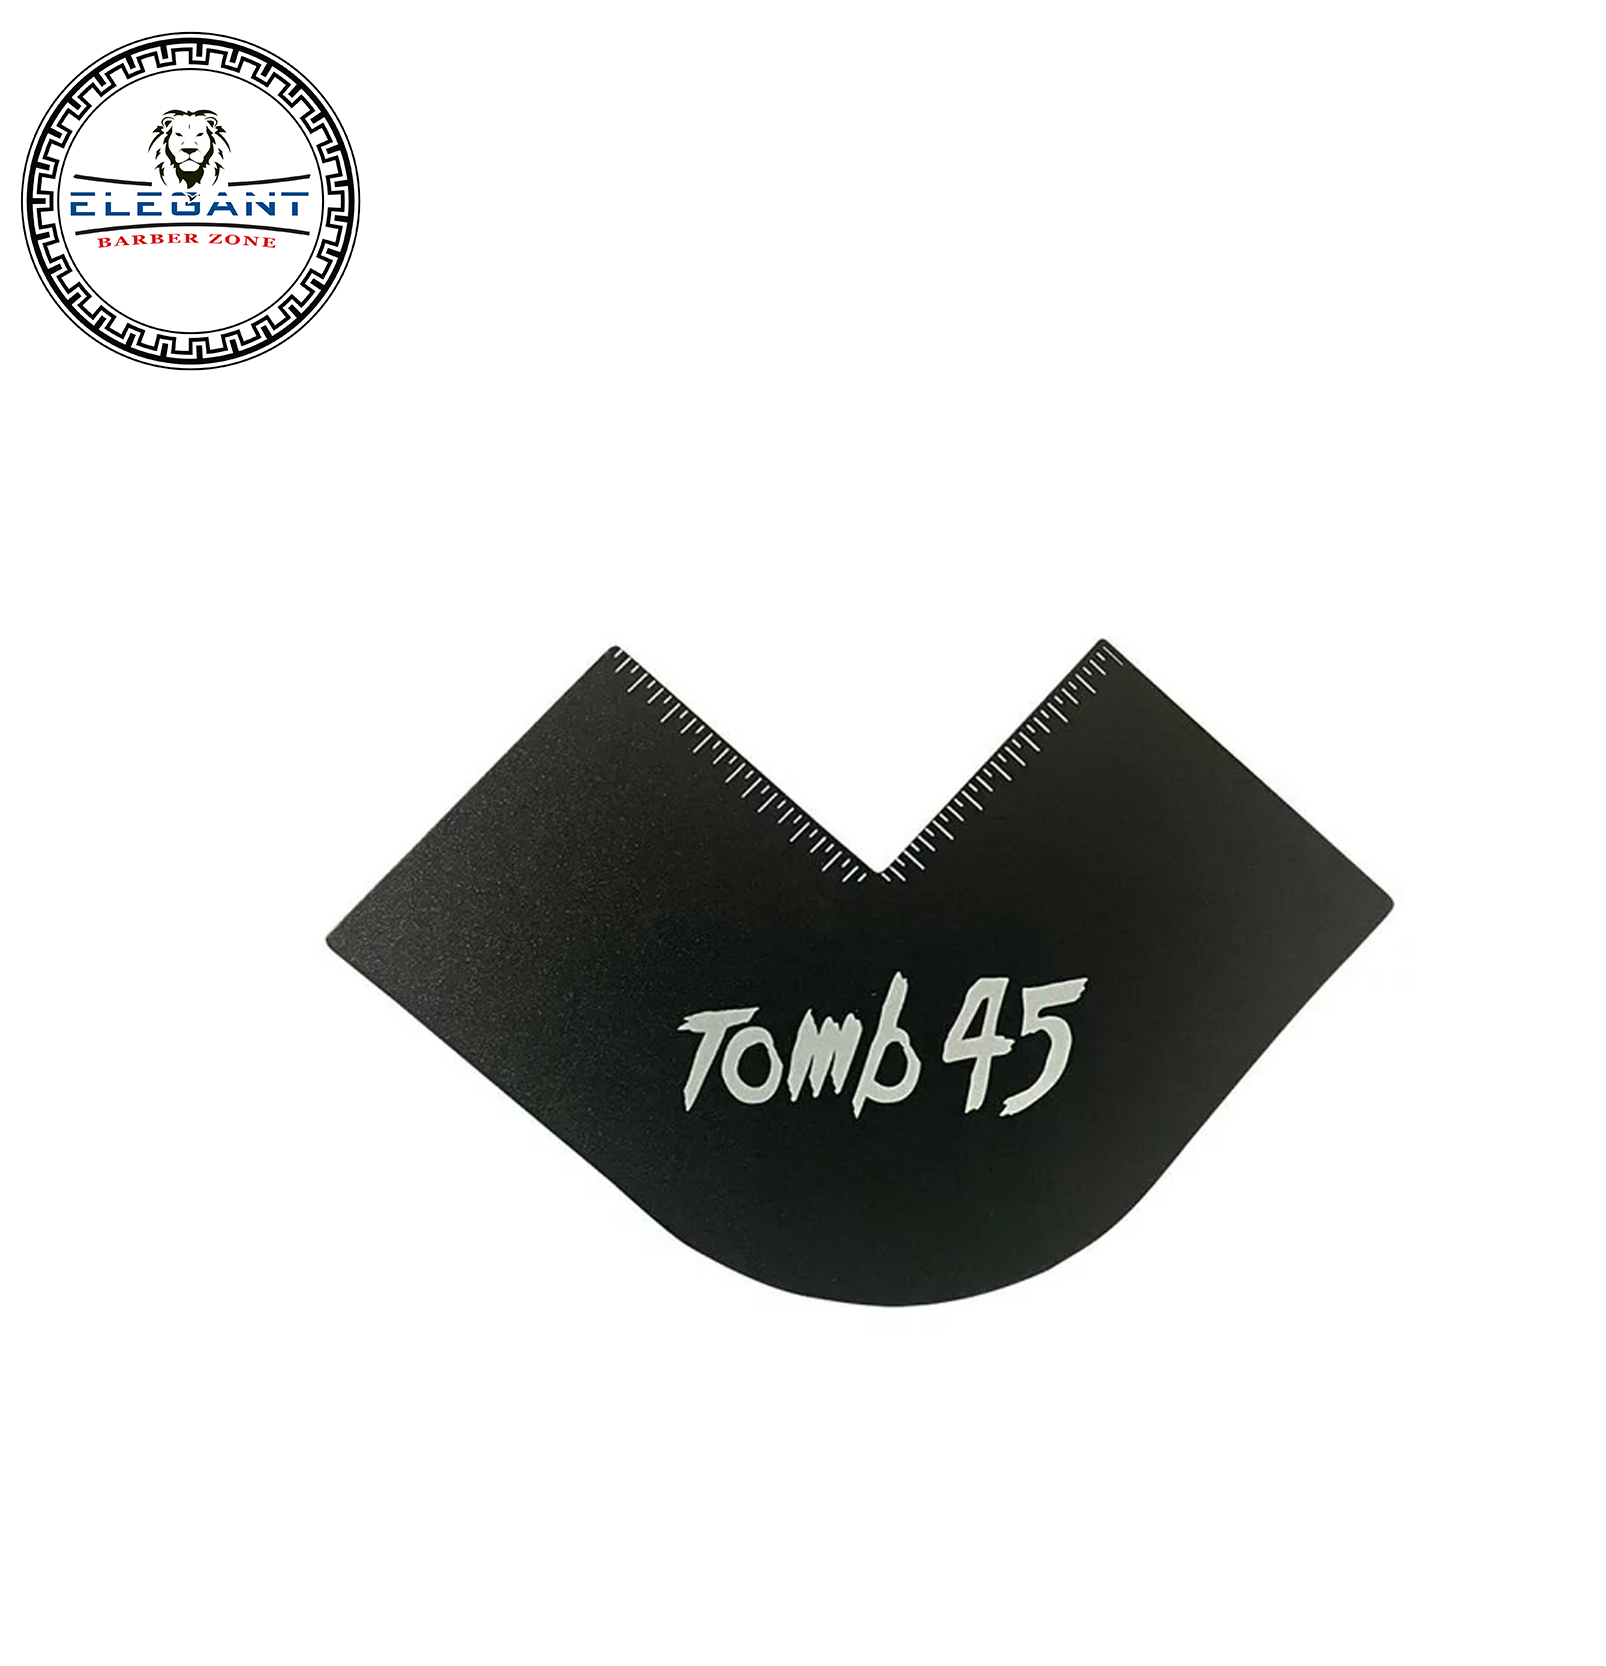  Tomb45 Beard & Lineup Enhancement Coloring + Klutch Card 2.0  (Black)